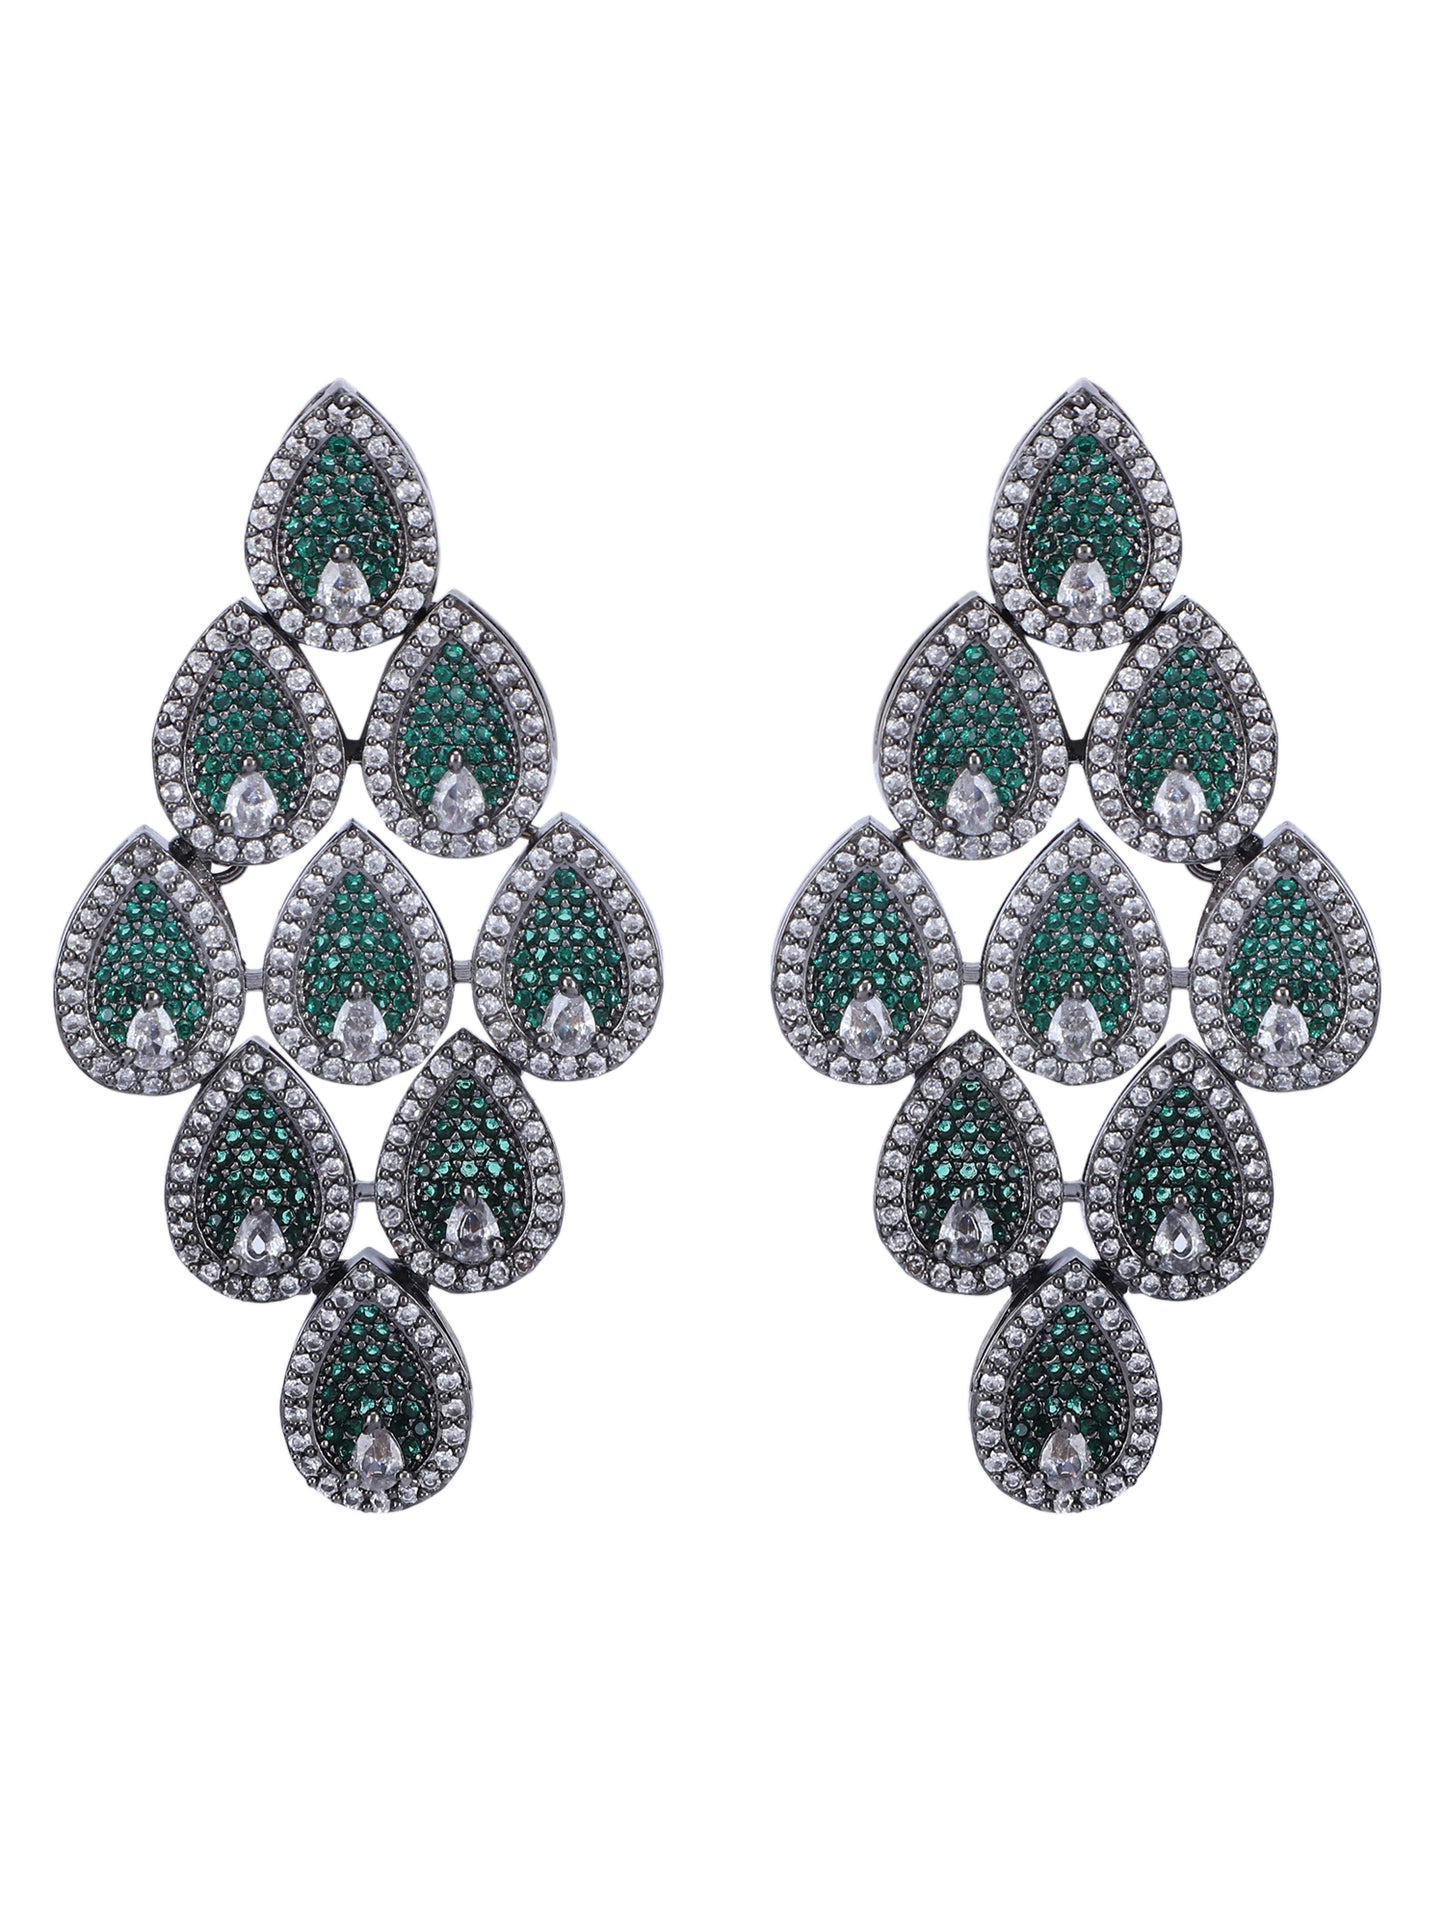 Rhodium Plated American Diamond Zircon Green Earring Set For women and Girls